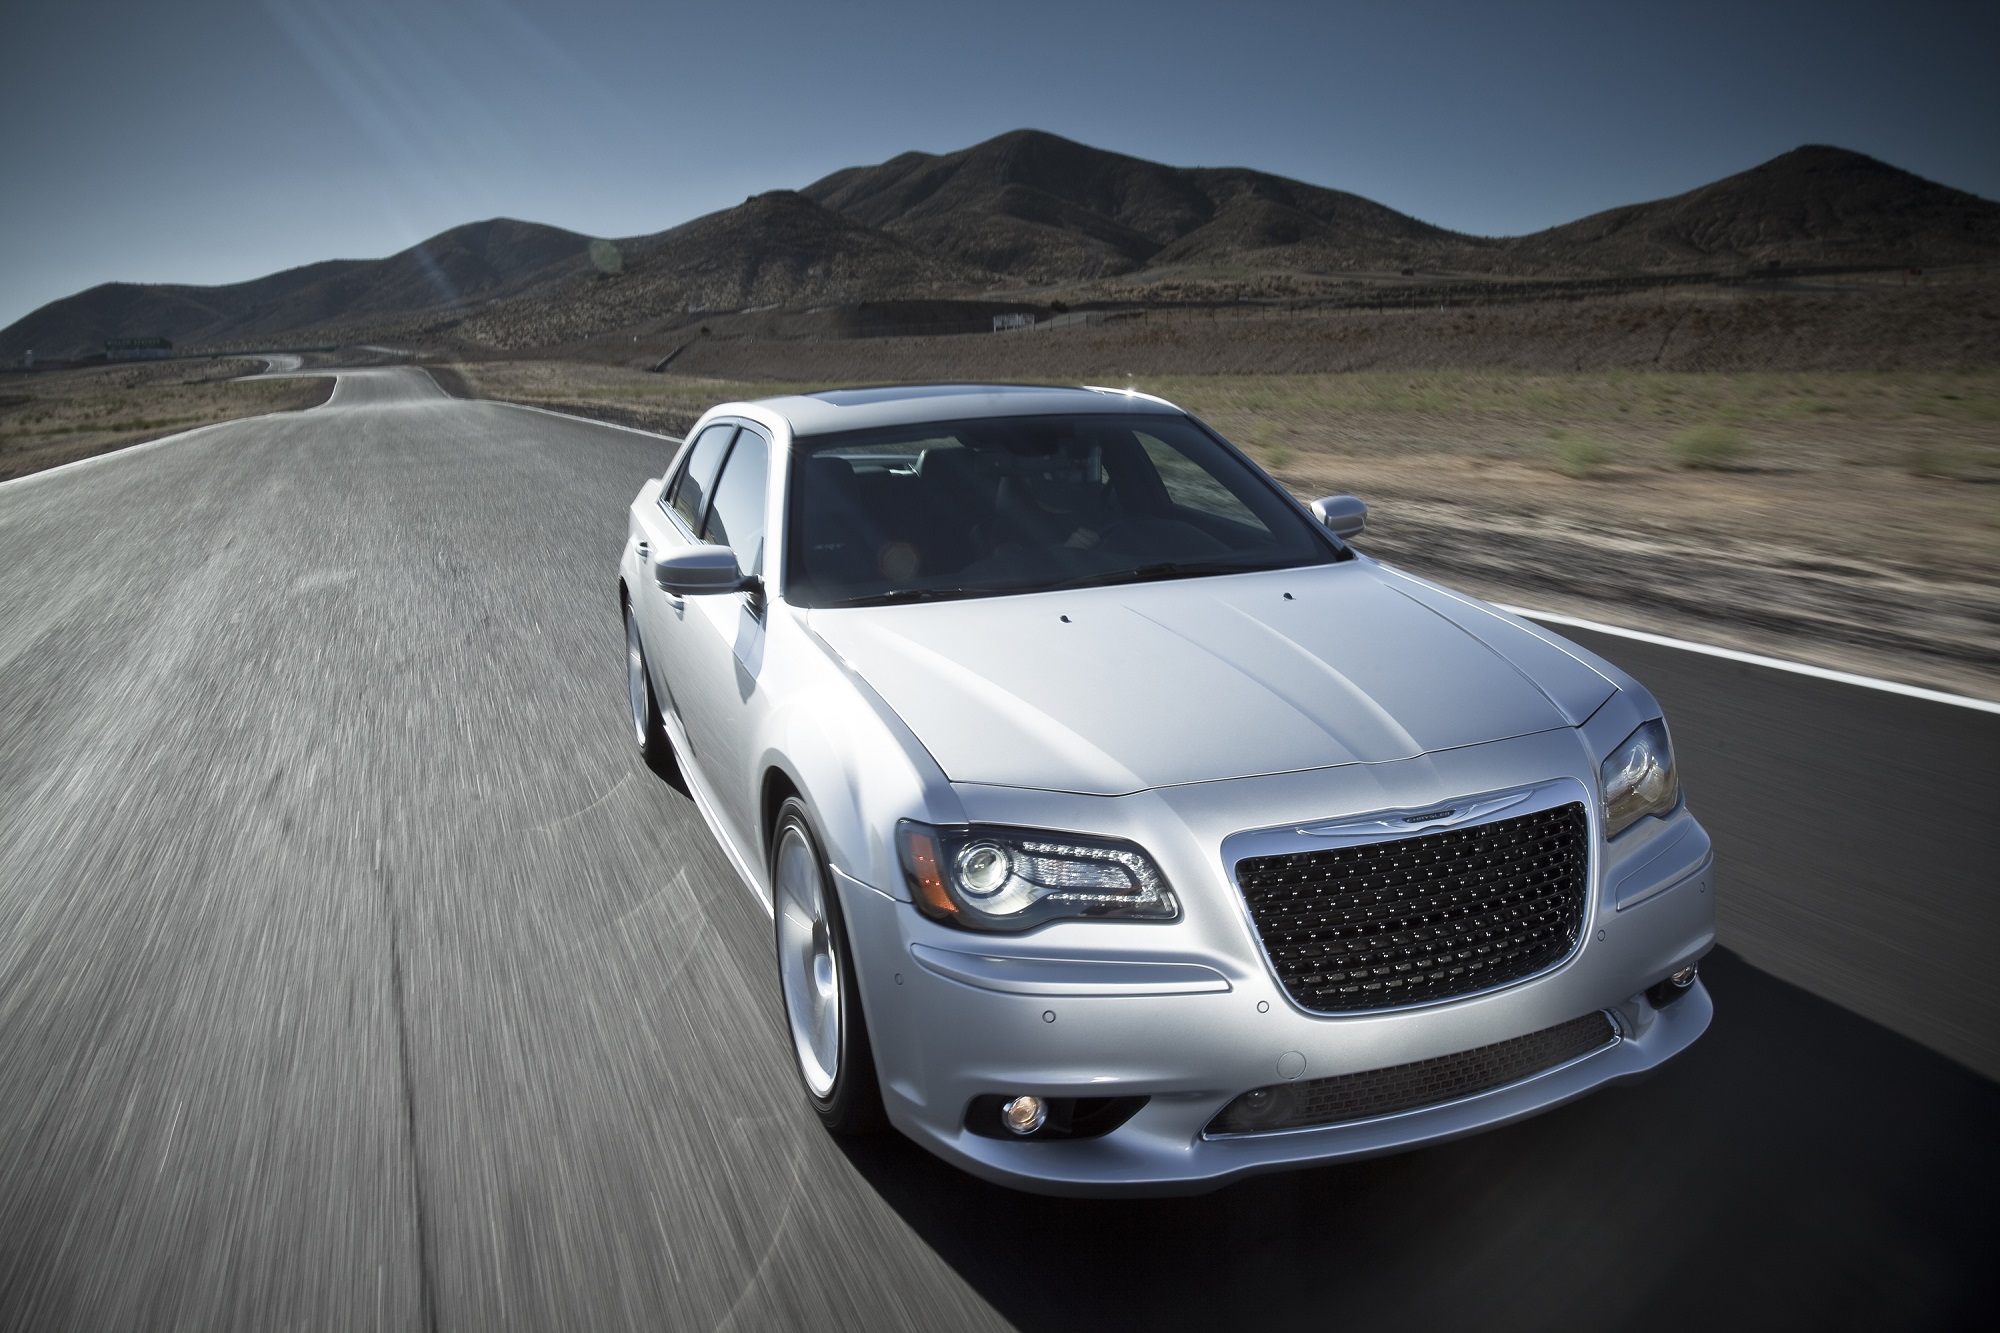 The 2014 Chrysler 300 SRT8 packs SRT power and luxury credentials.